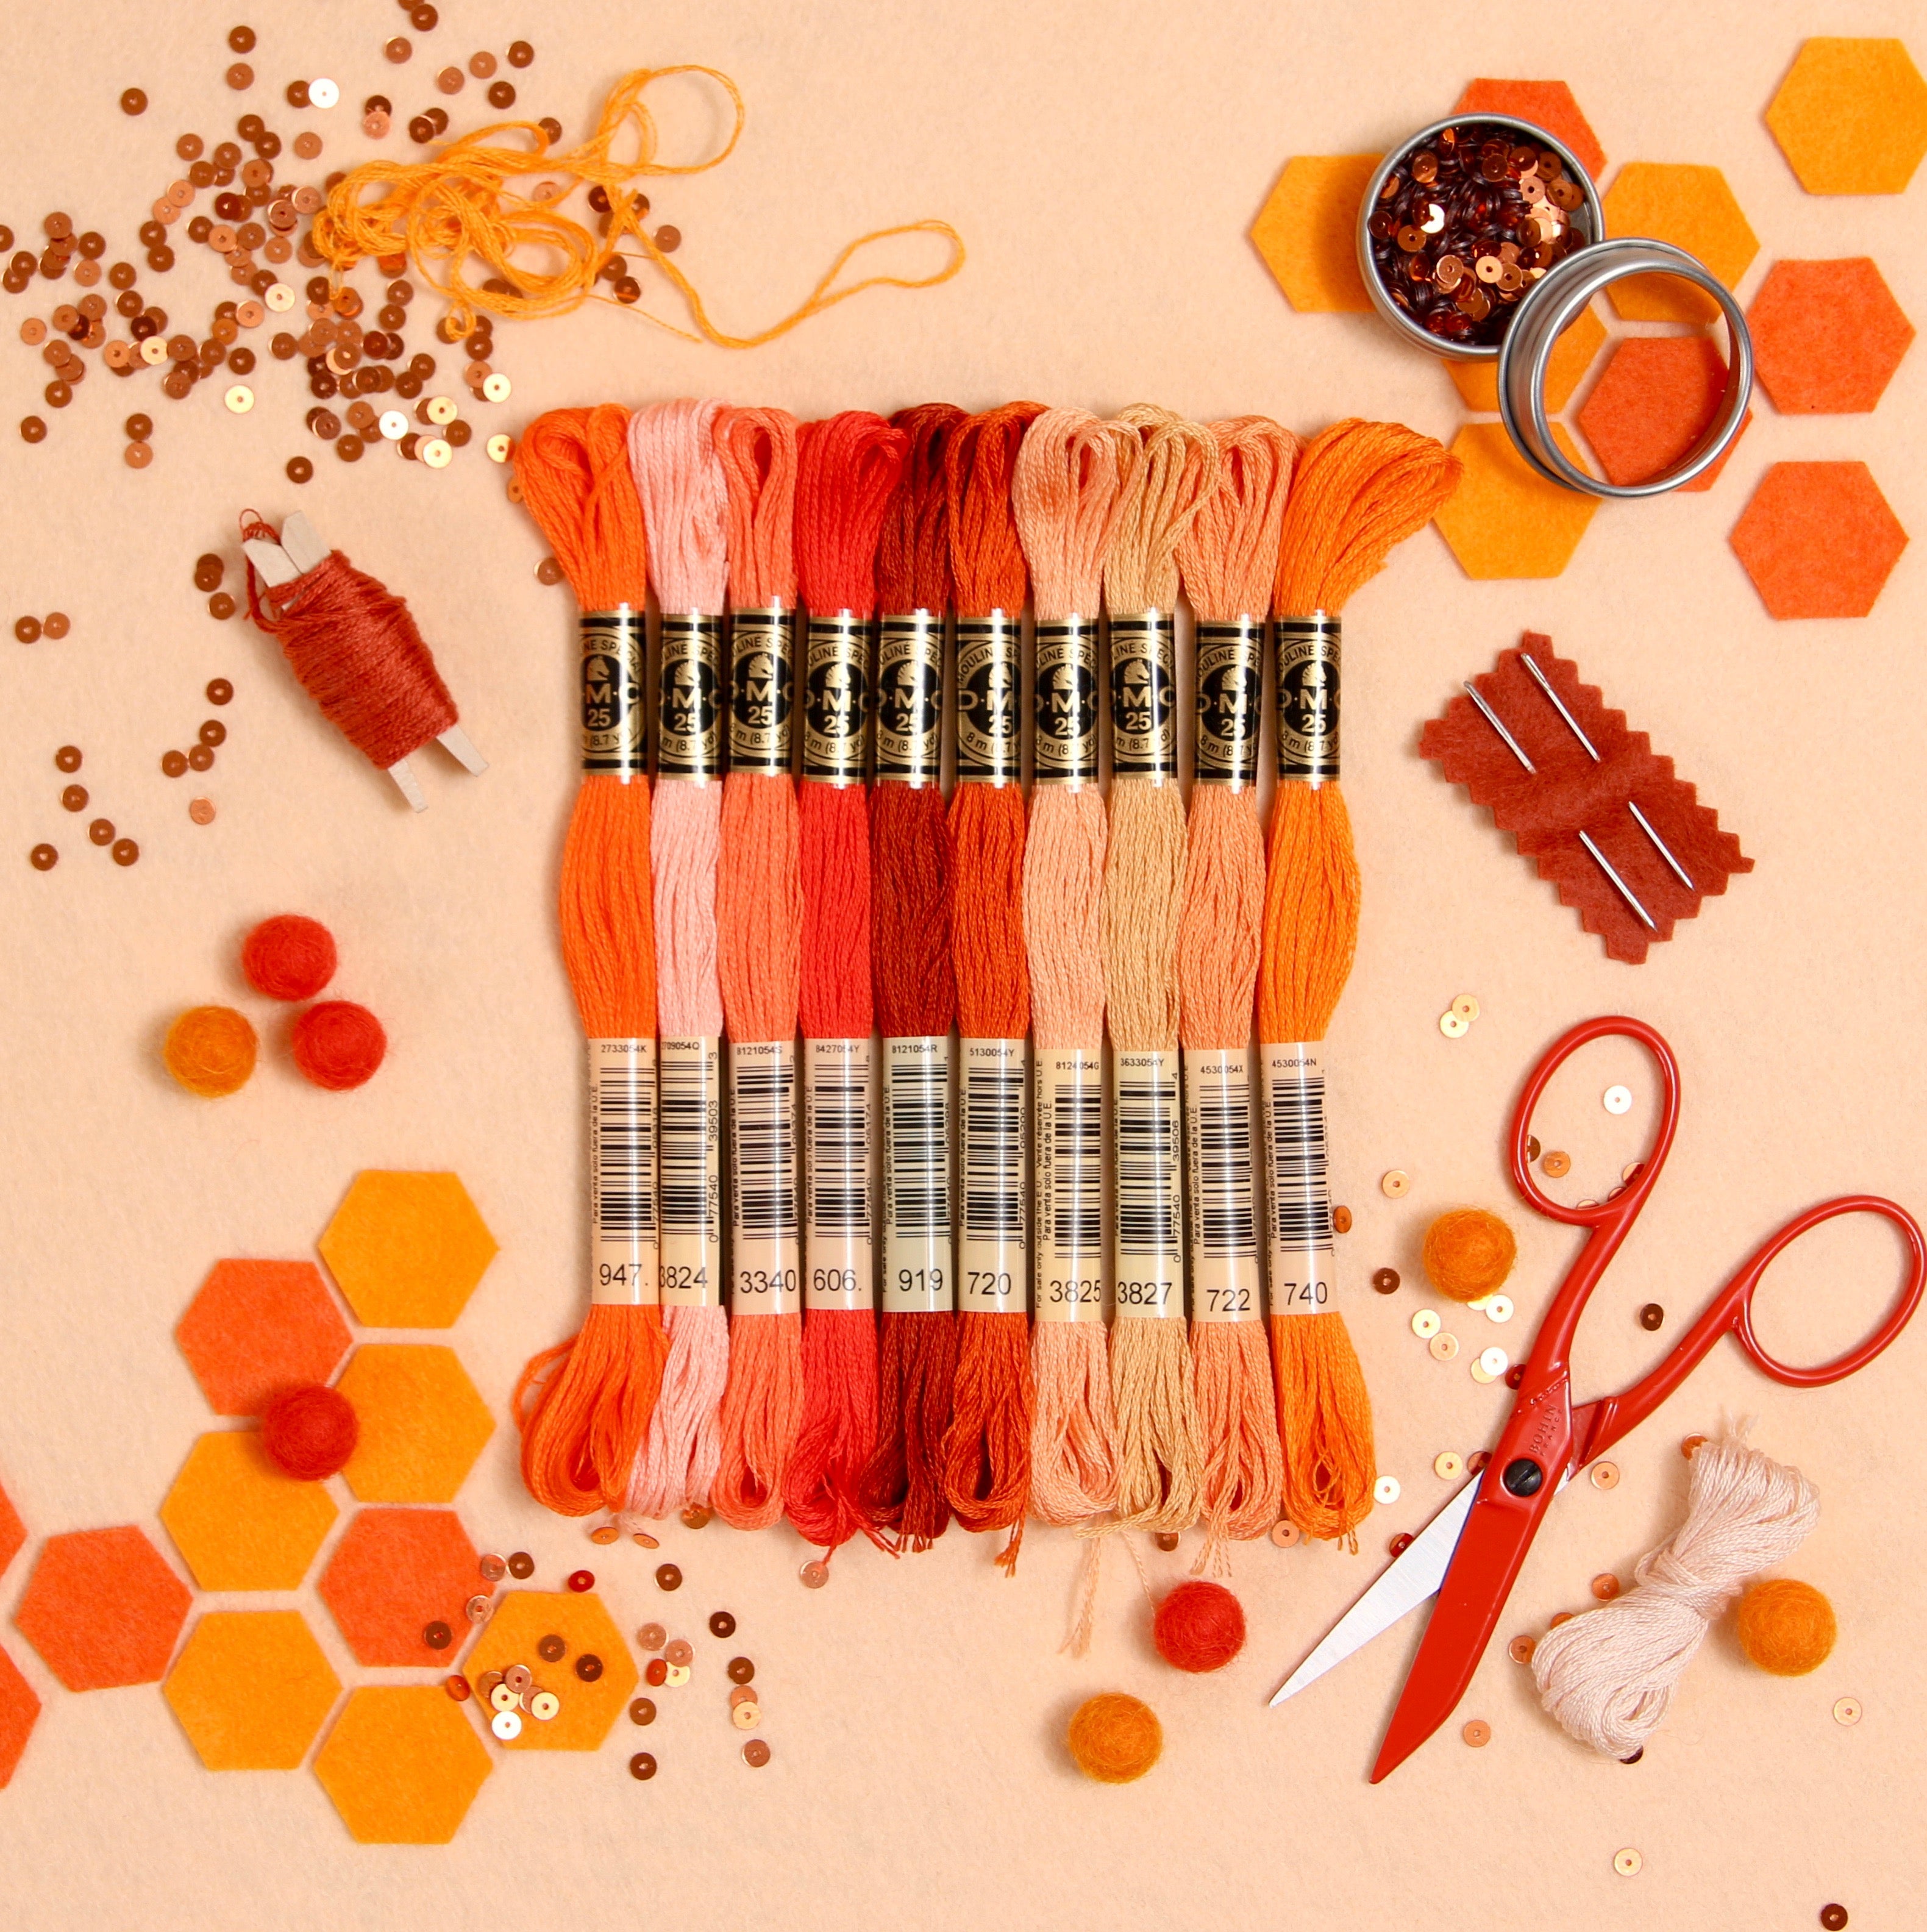 DMC 6 Strand Embroidery Floss Cotton Thread Bulk 606 Bright Orange